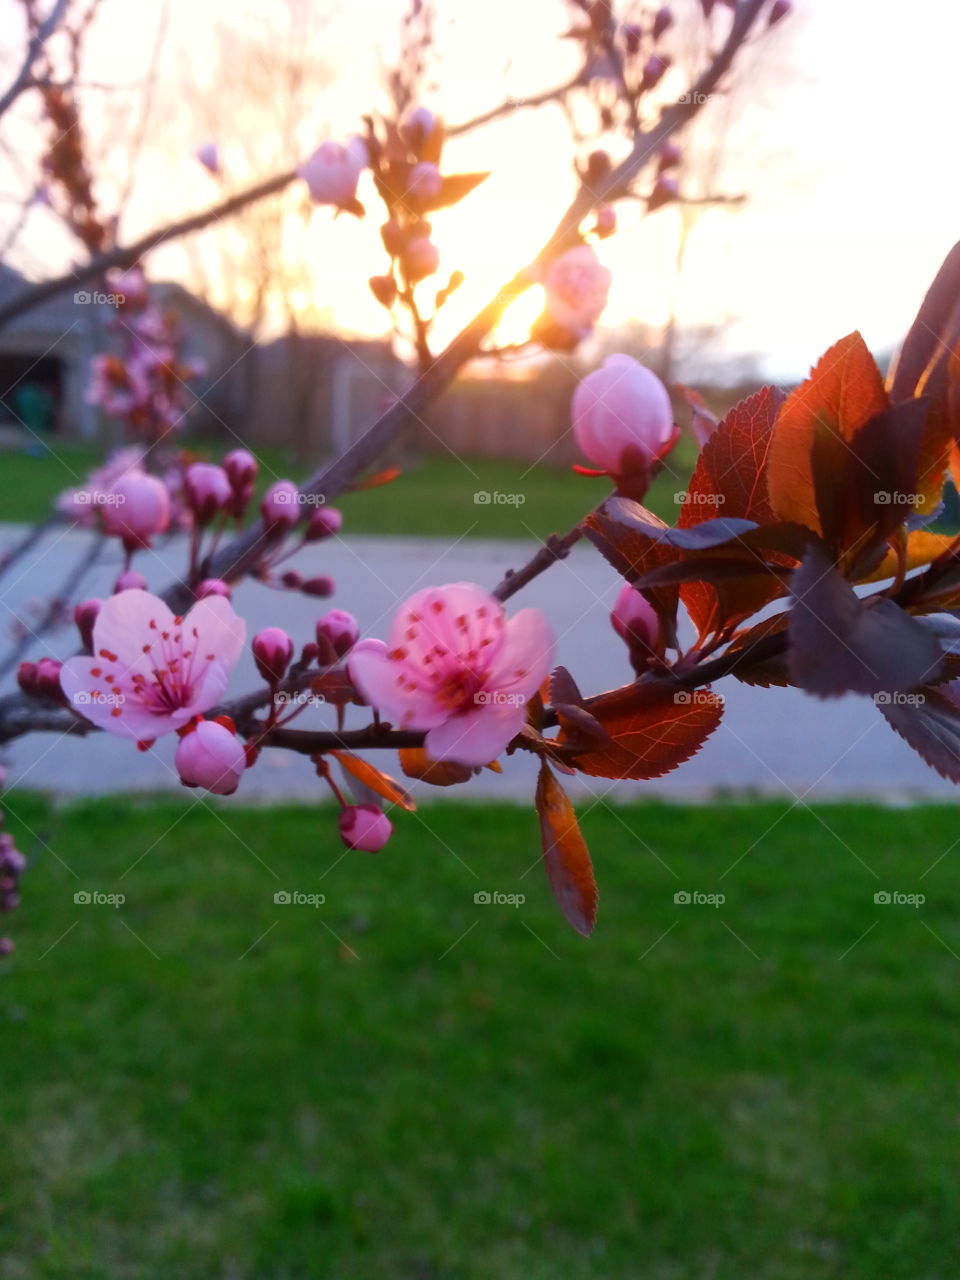 bloom. spring time brings new life.